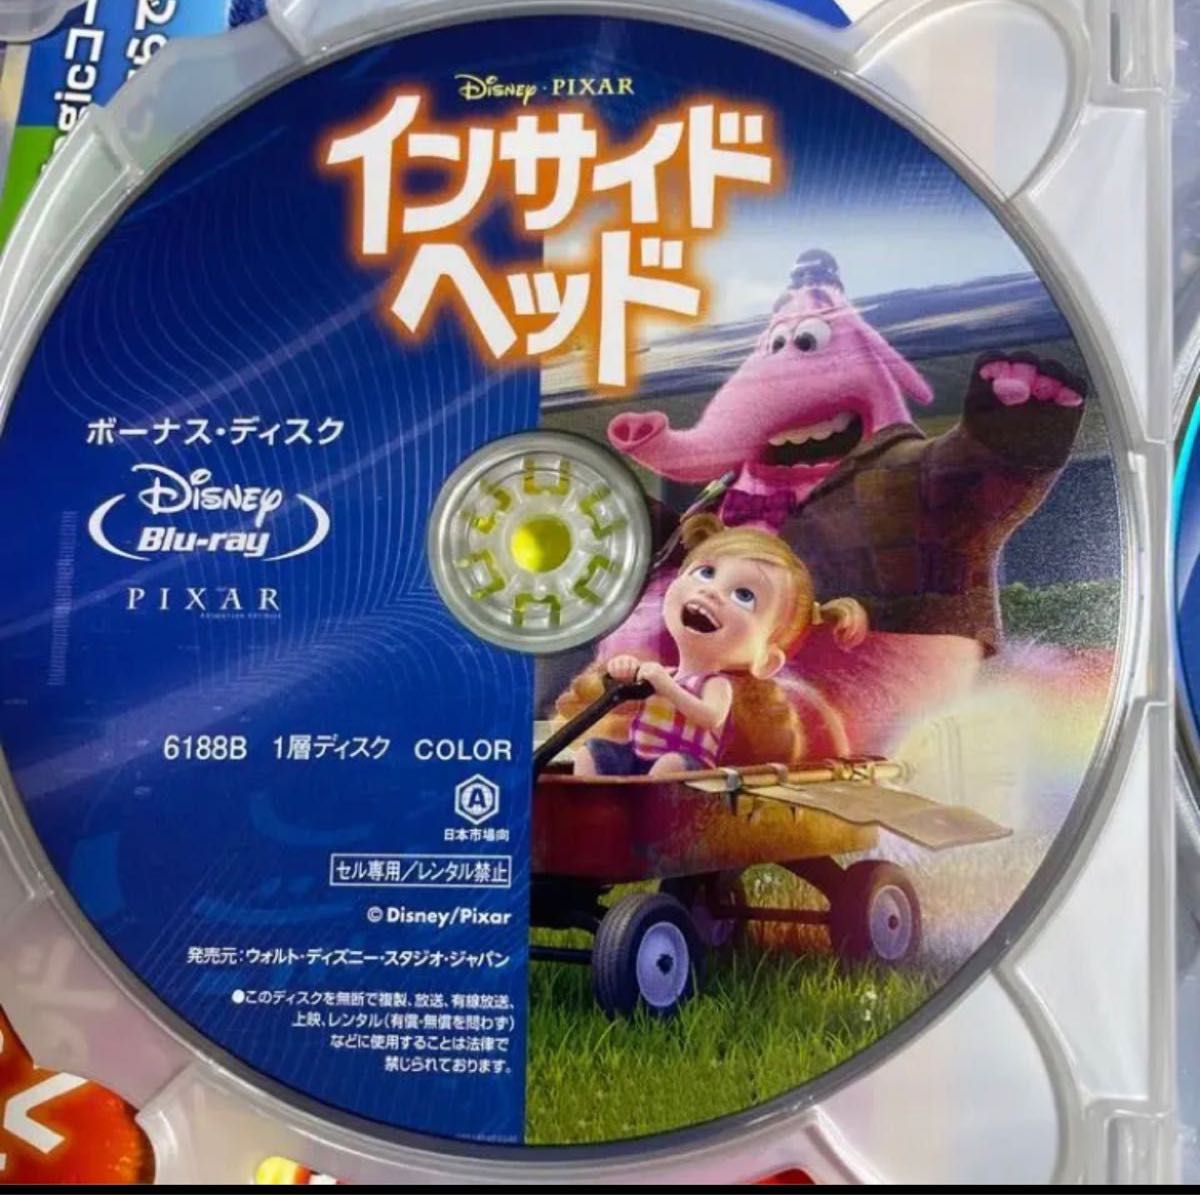 Blu-ray。フォロ割200円引きします。相談で200円引き受けます。商品説明にお得情報？インサイドヘッド